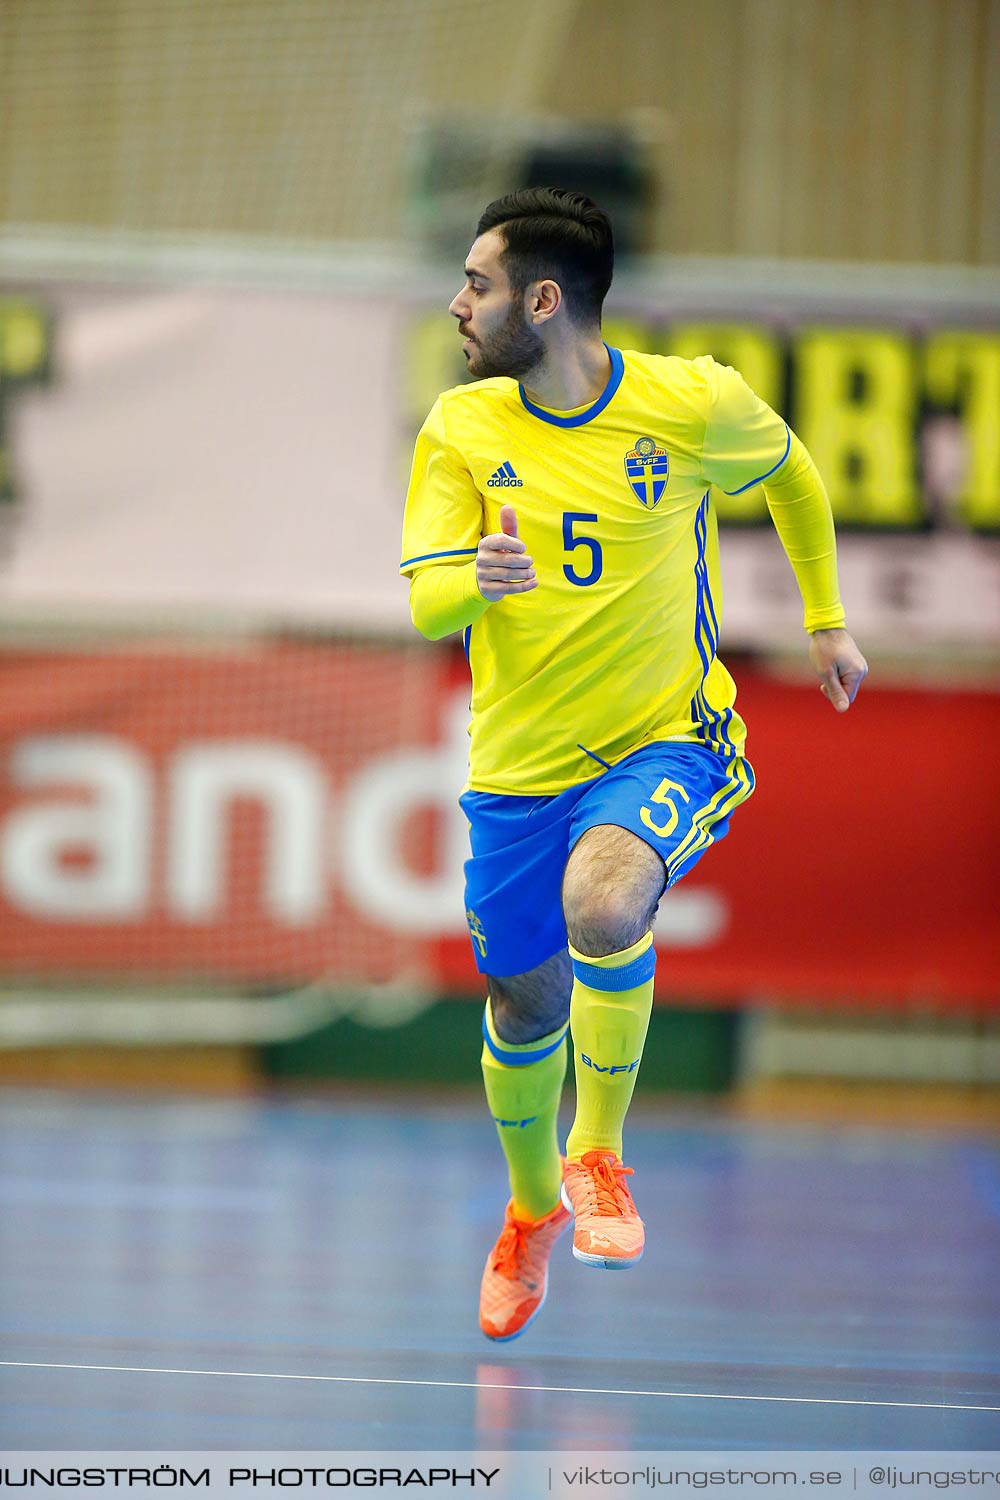 Landskamp Sverige-Finland 3-6,herr,Arena Skövde,Skövde,Sverige,Futsal,,2016,176951